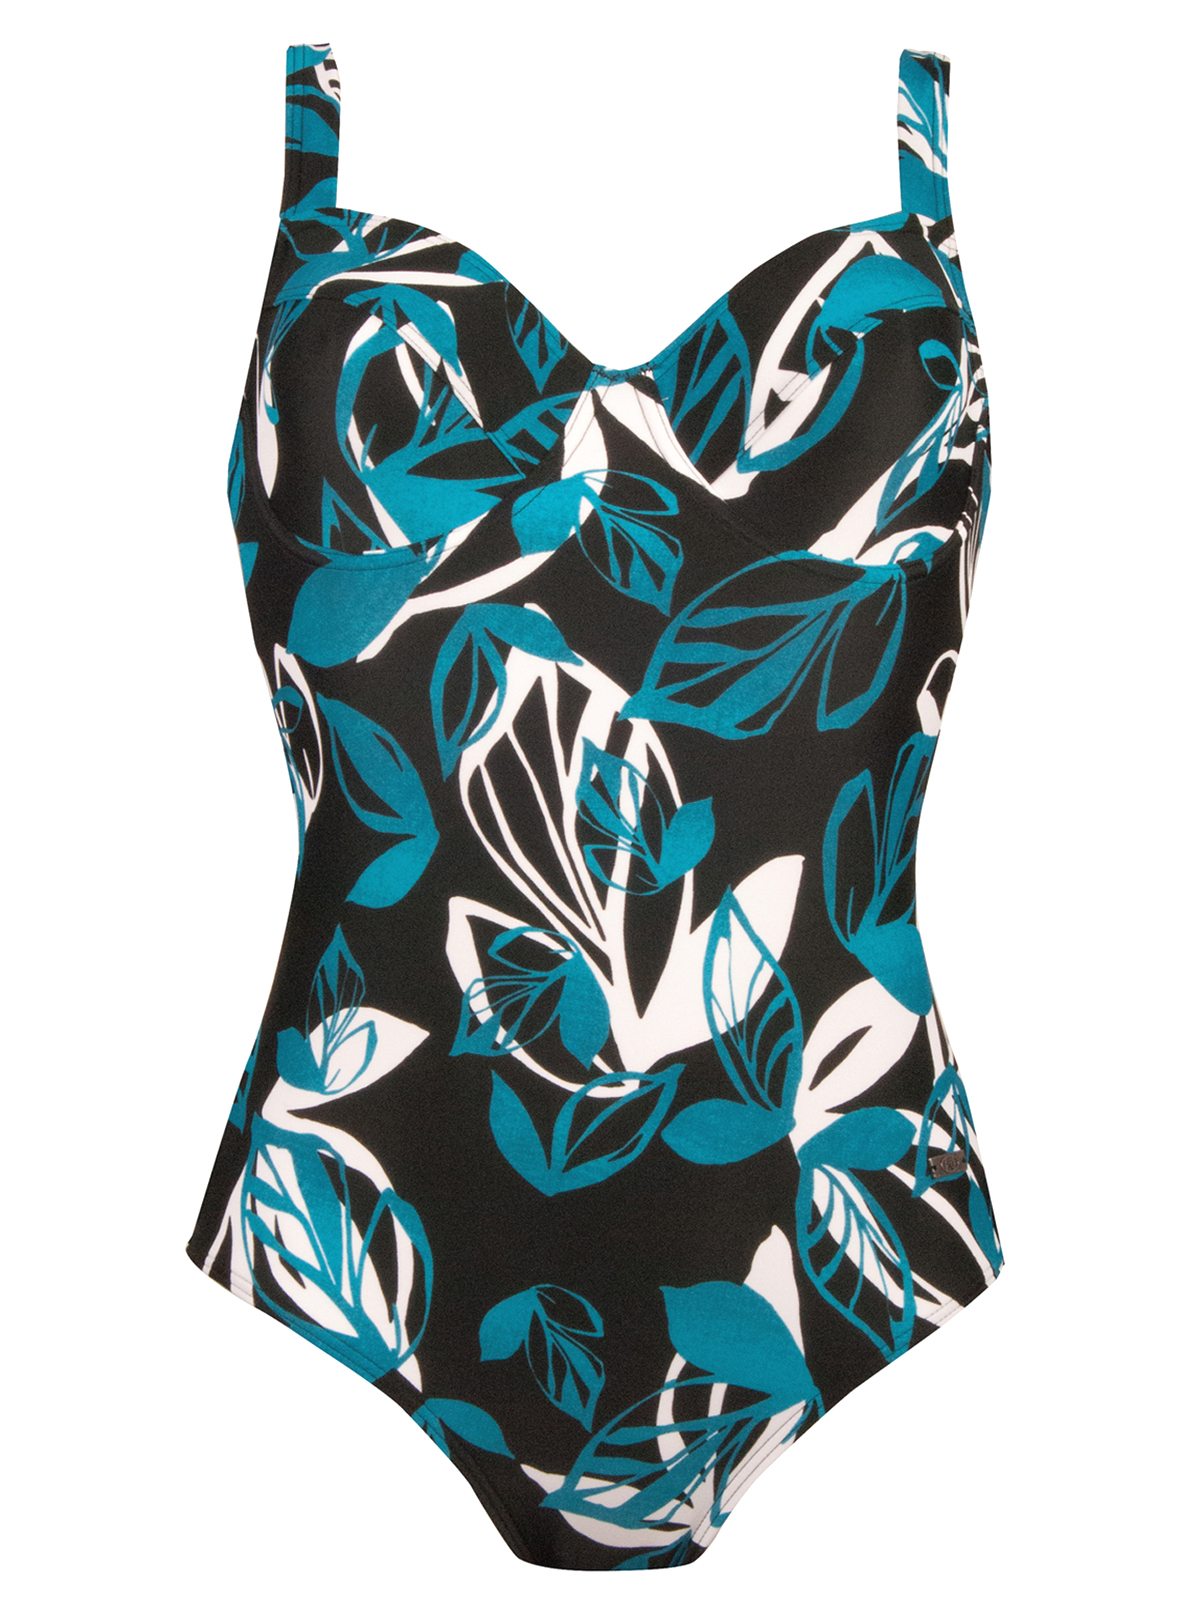 Naturana - - Naturana ASSORTED Plain & Printed Swimsuits - Size 10 to 12